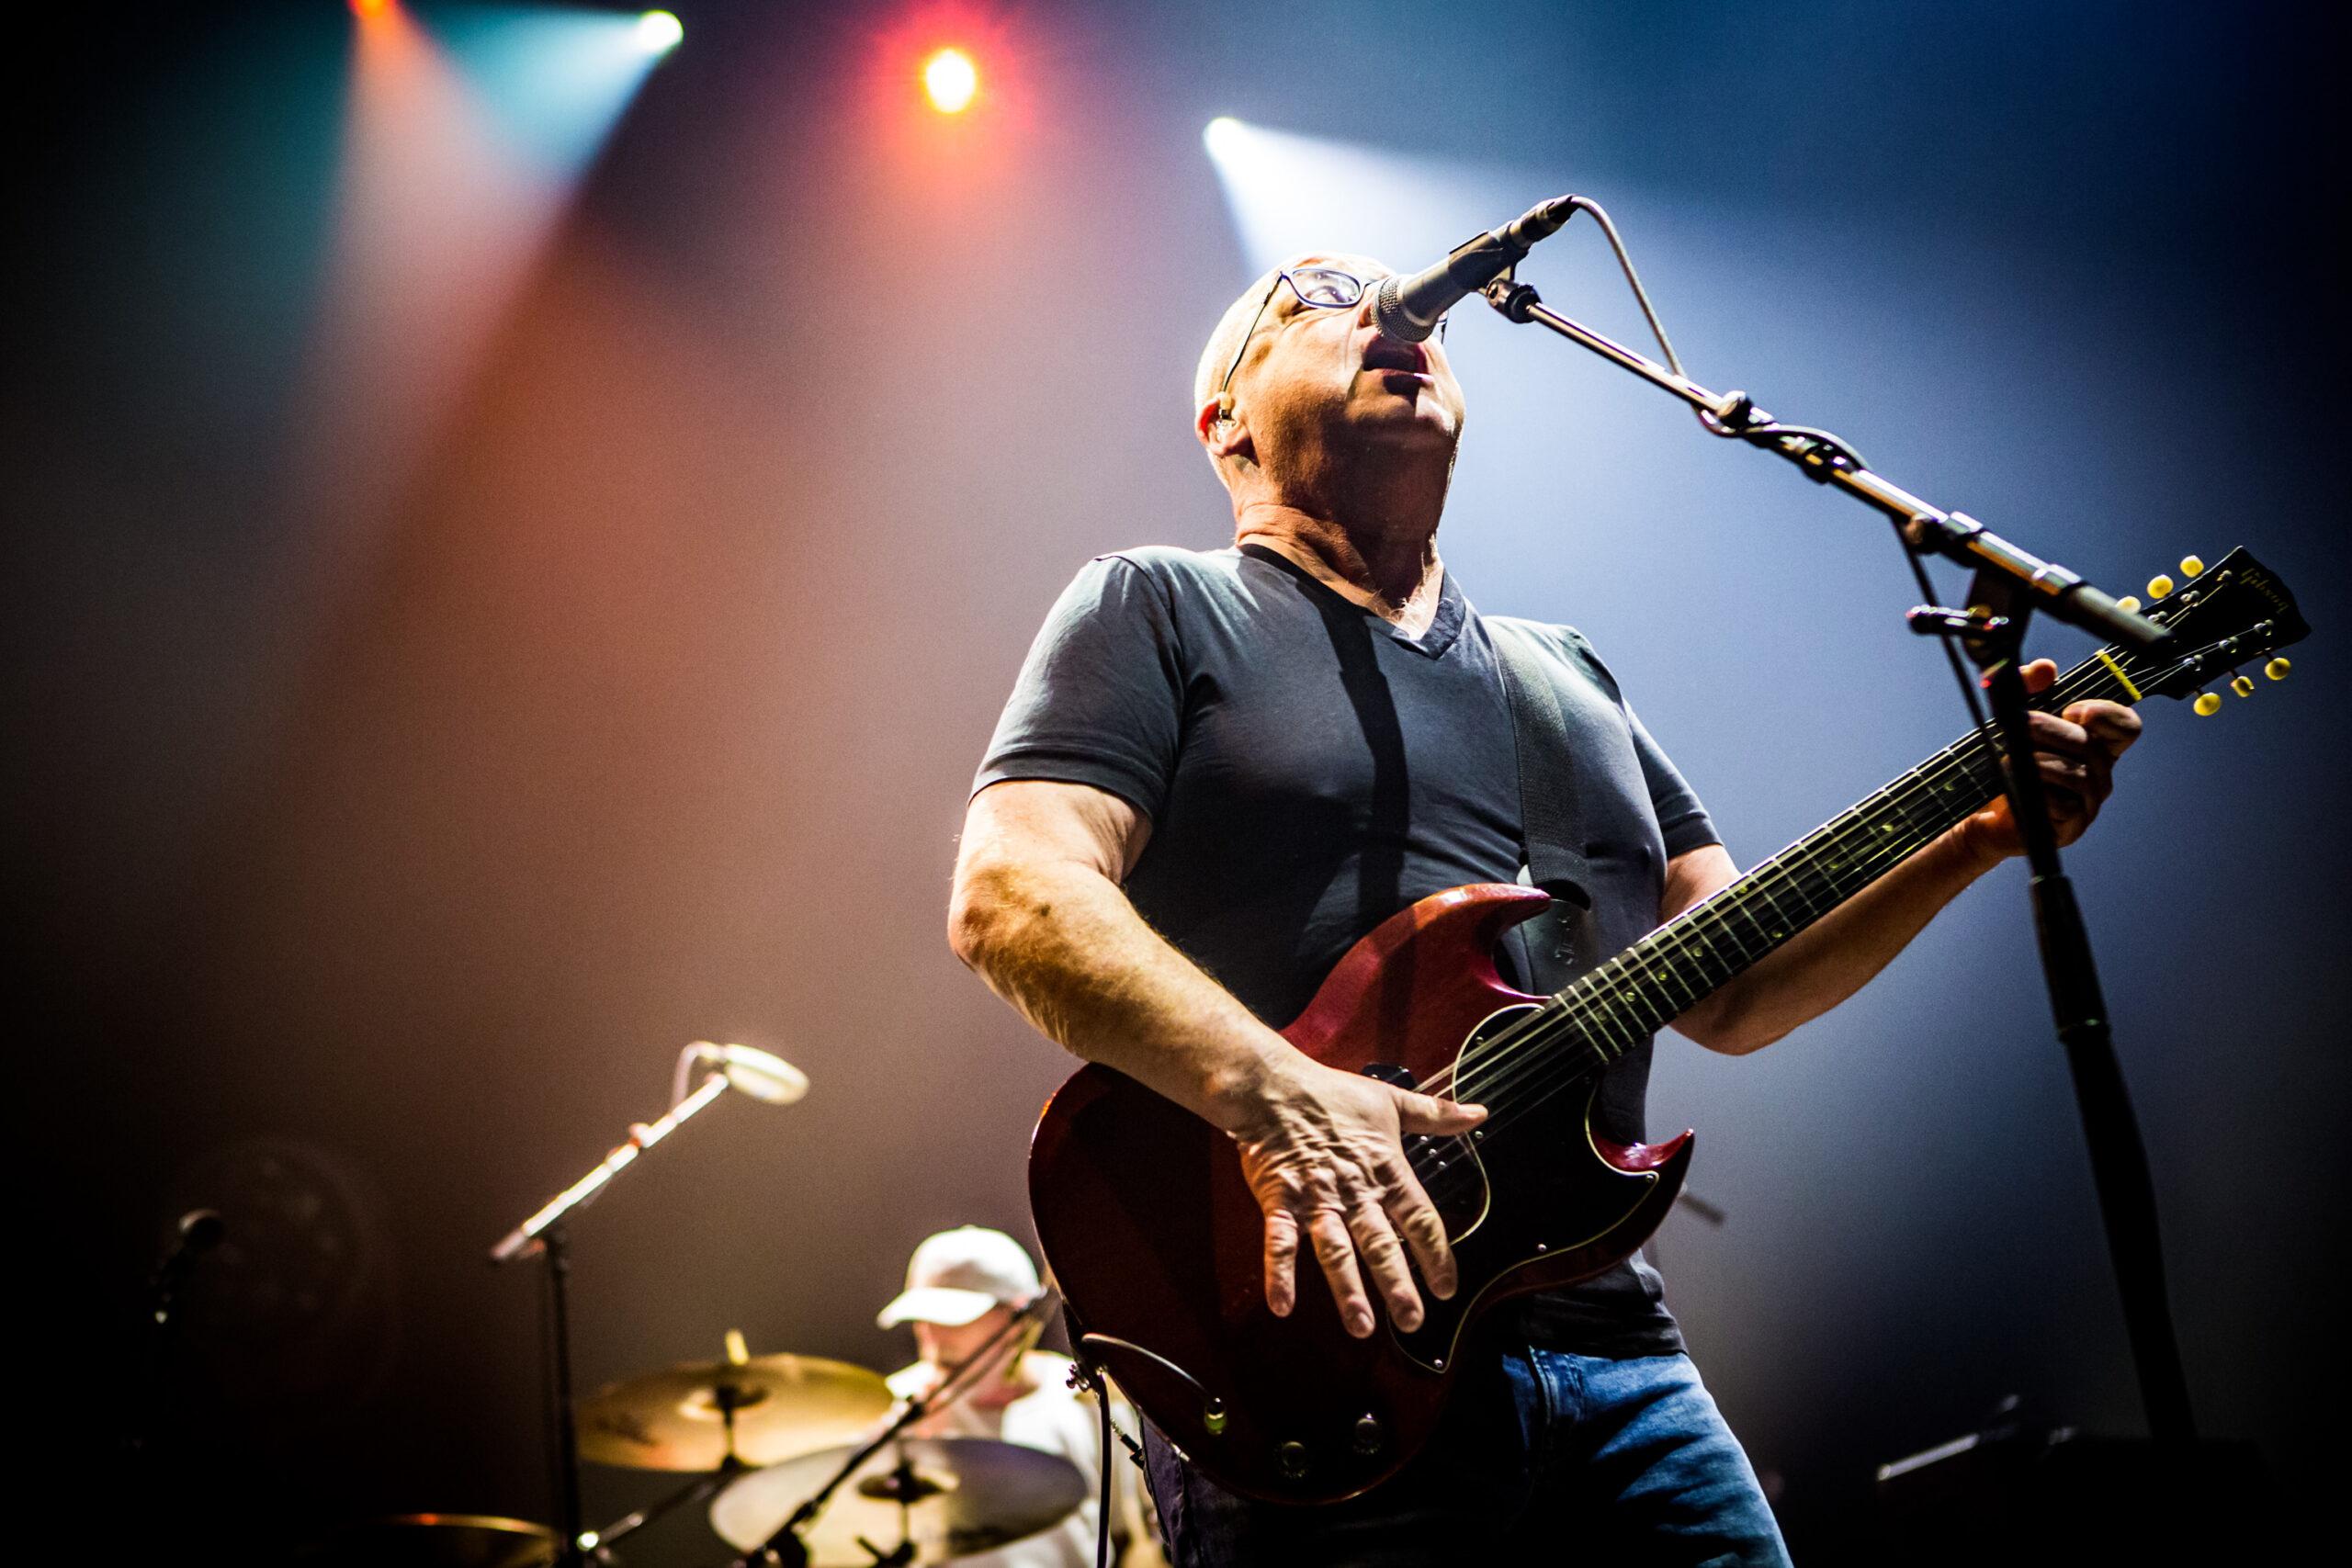 Pixies @ Vorst National: Atletik Musik Tingkat Lanjut